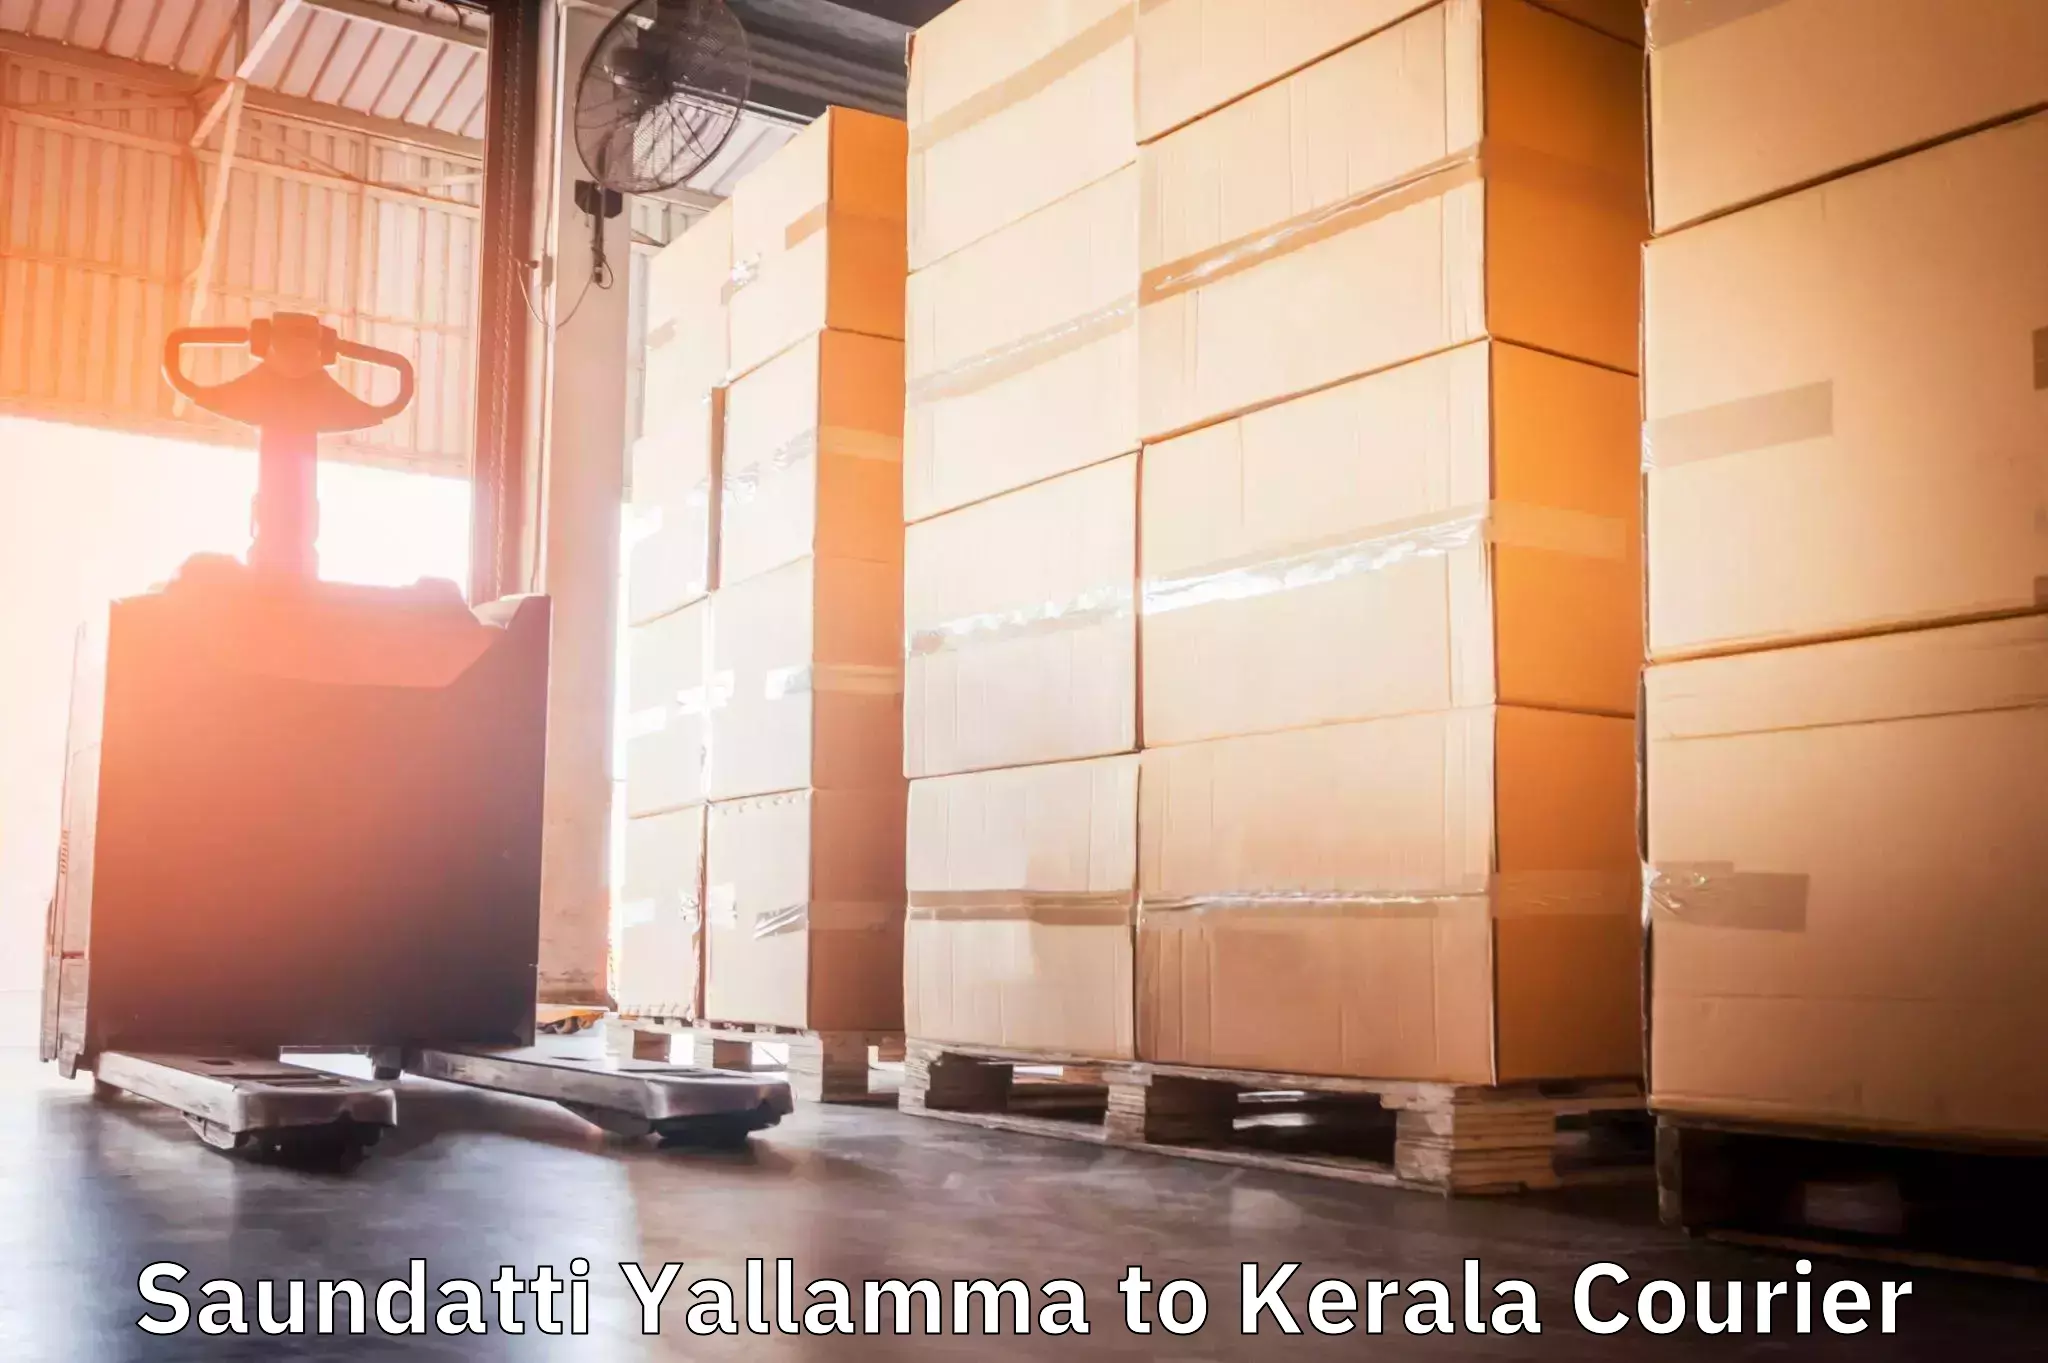 Courier service partnerships Saundatti Yallamma to Pangodu